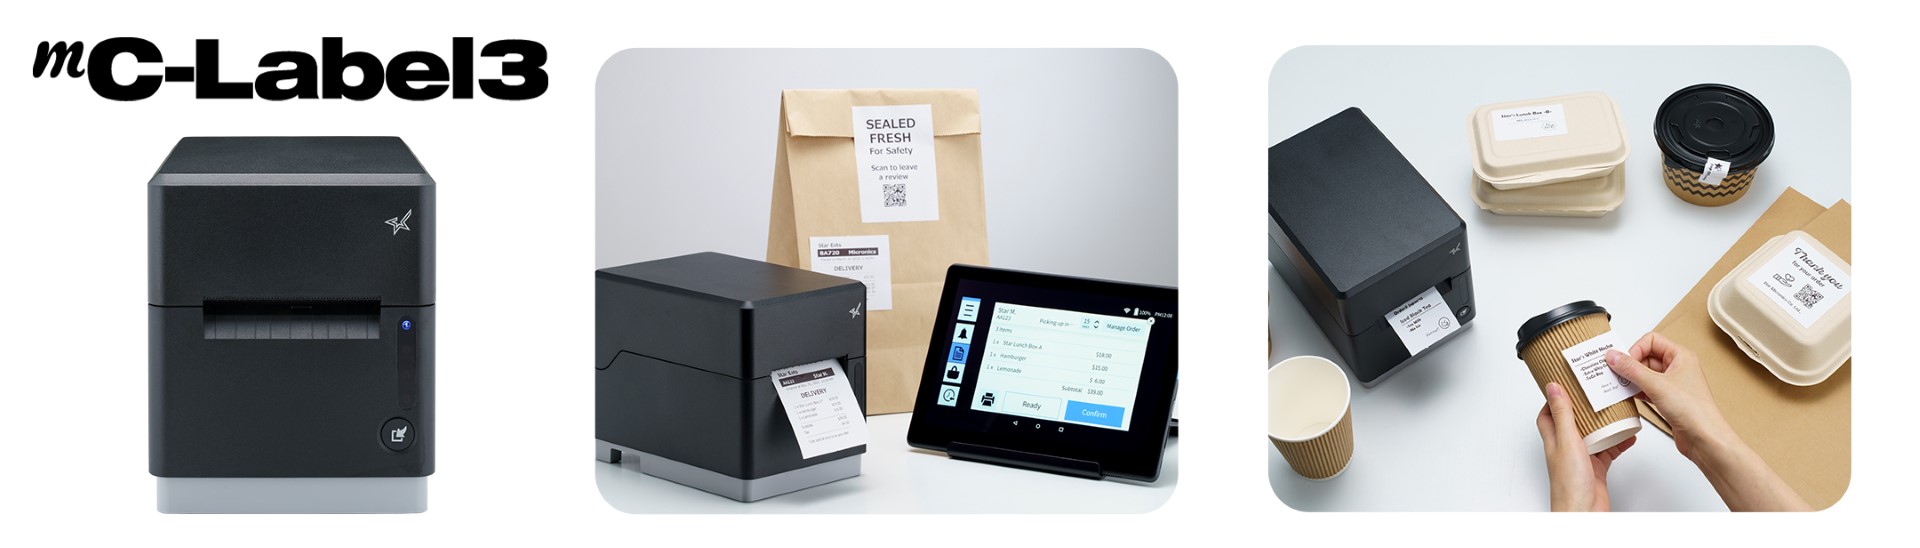 mC-Label3 Receipt & Label POS Printer - For Restaurants & Retail